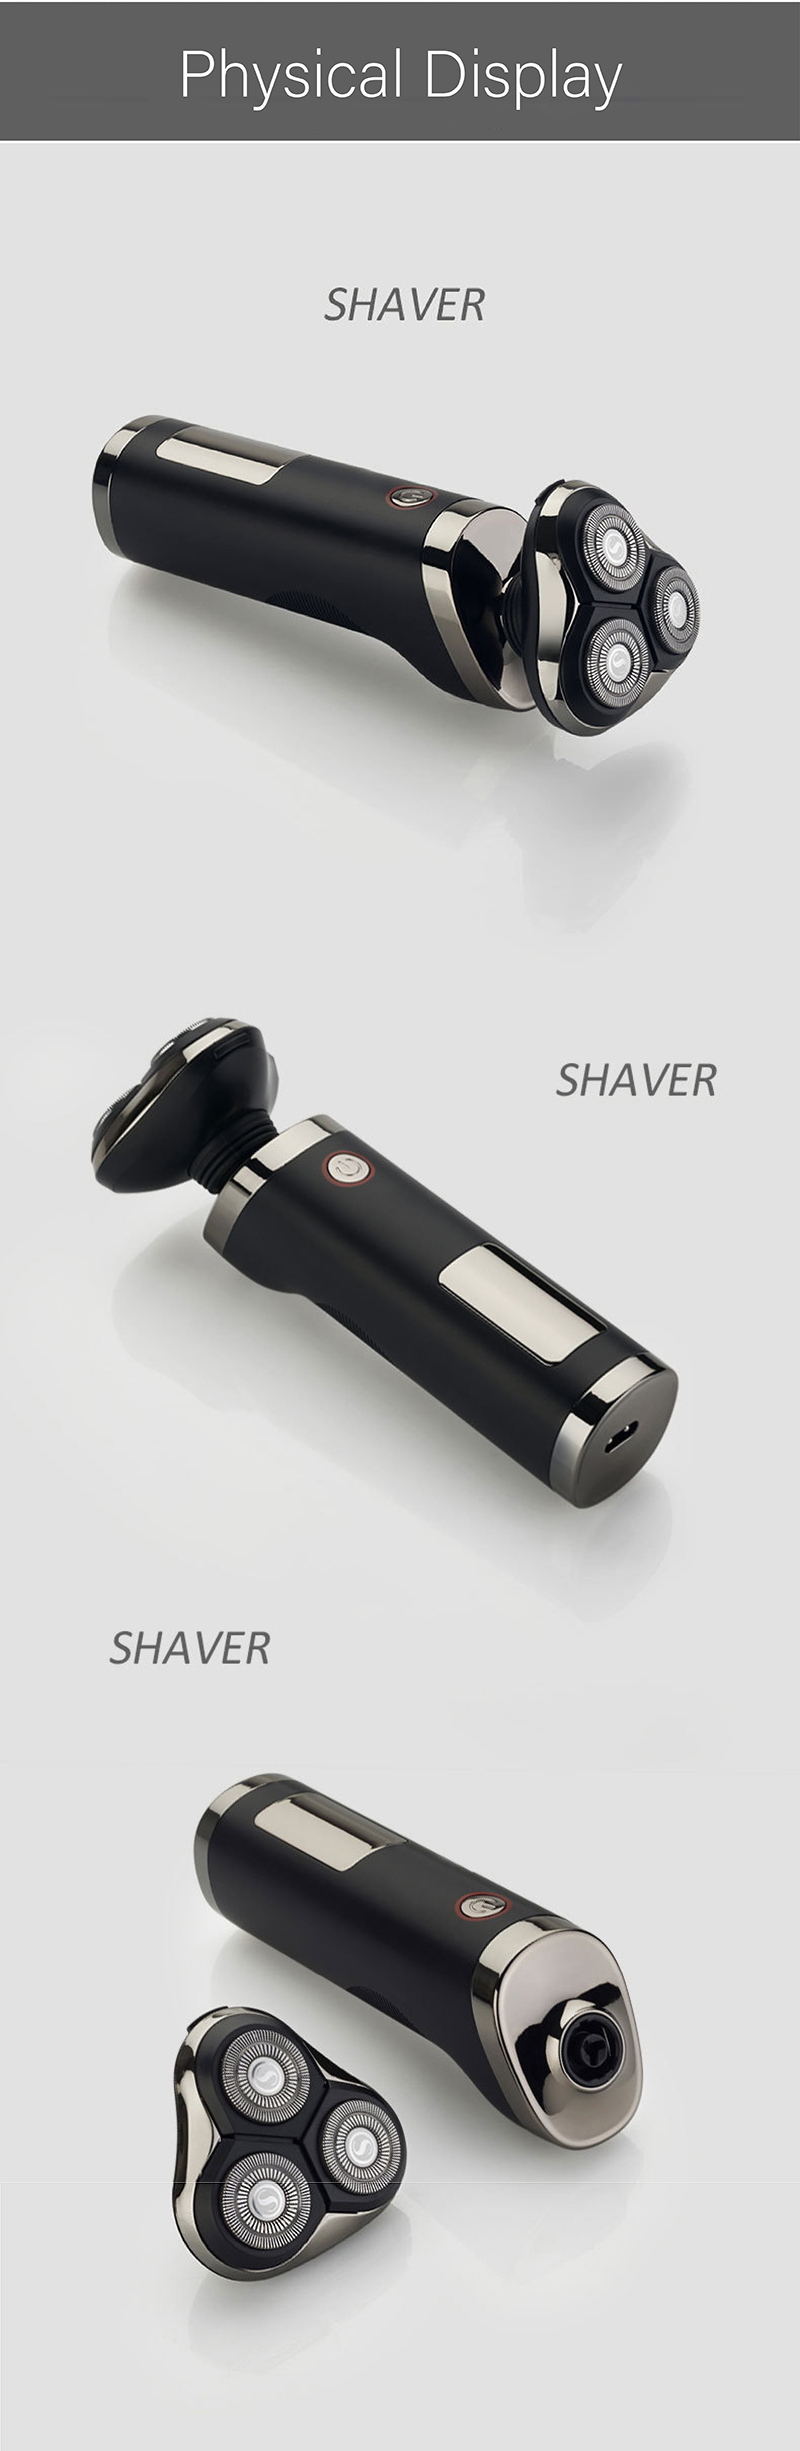 Electric Shaver Rotating Body Washing Shaver-13